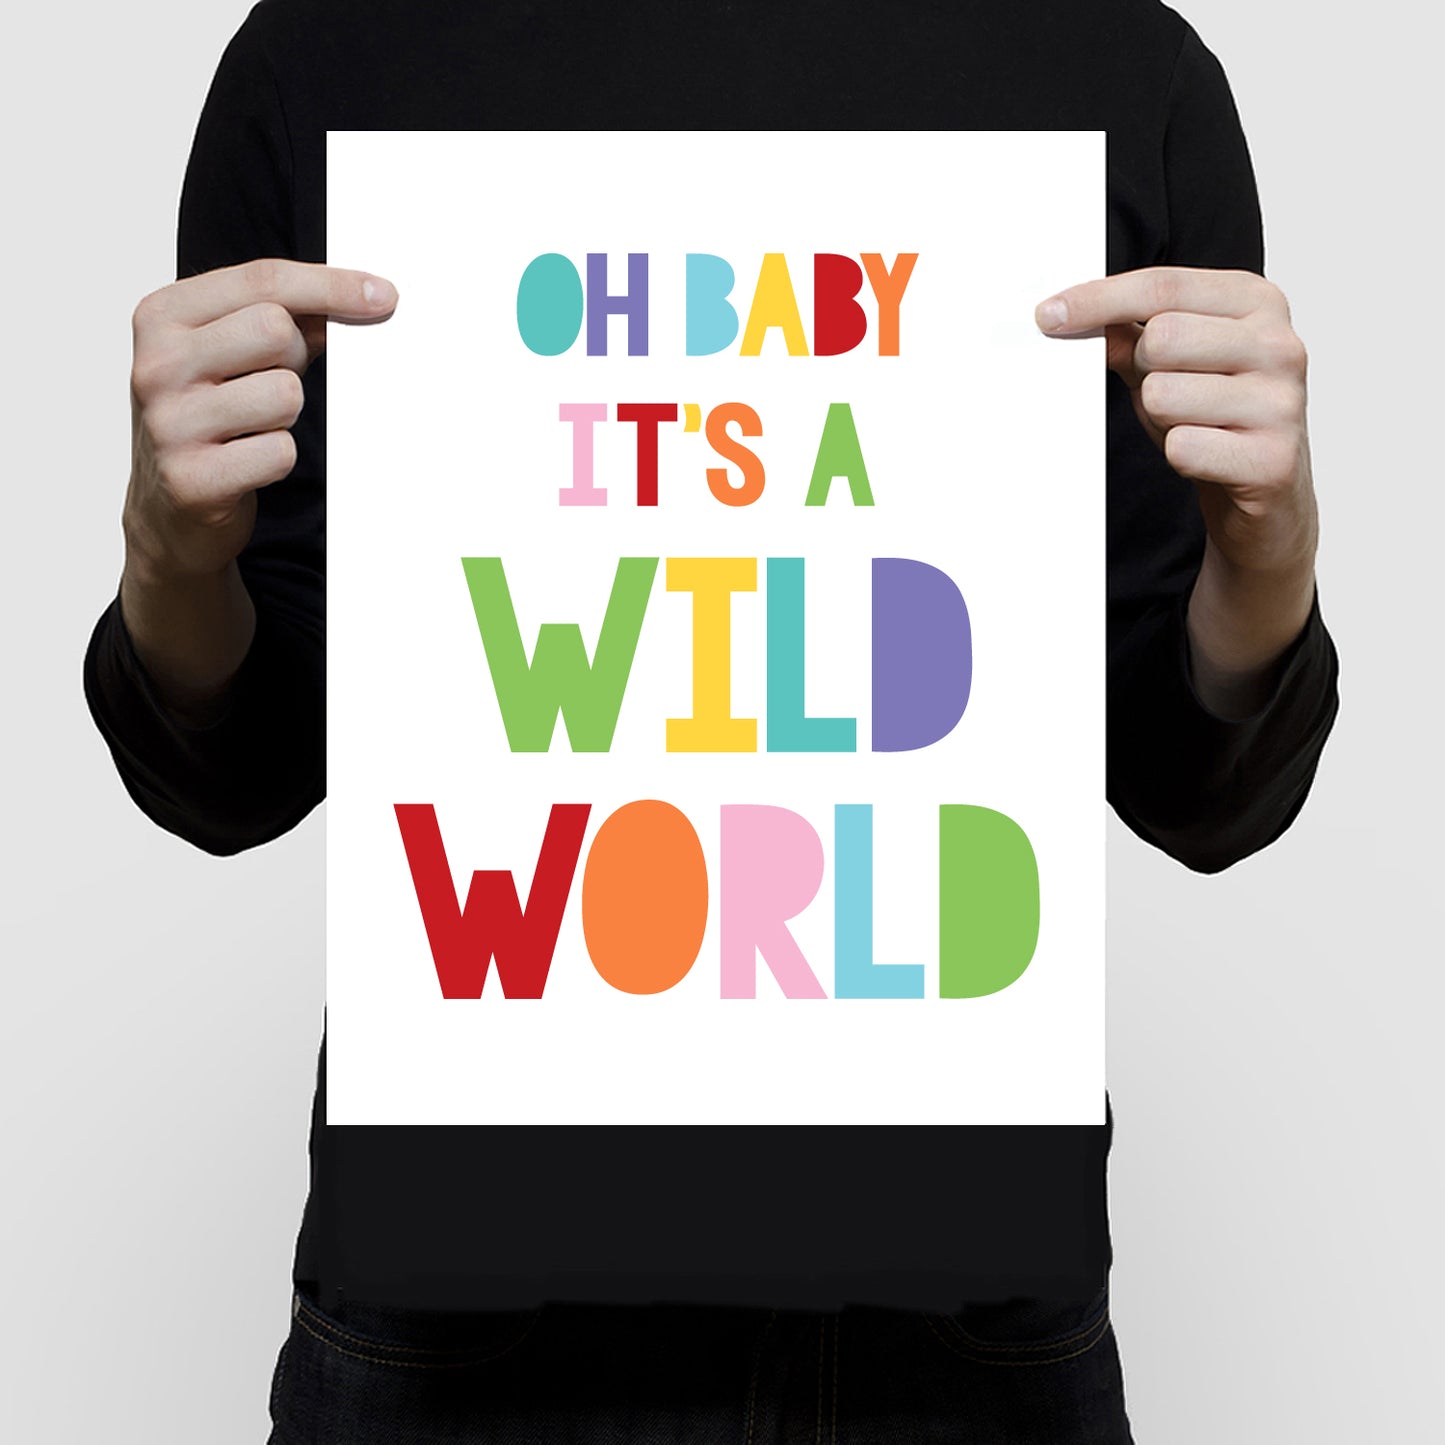 Wild world print